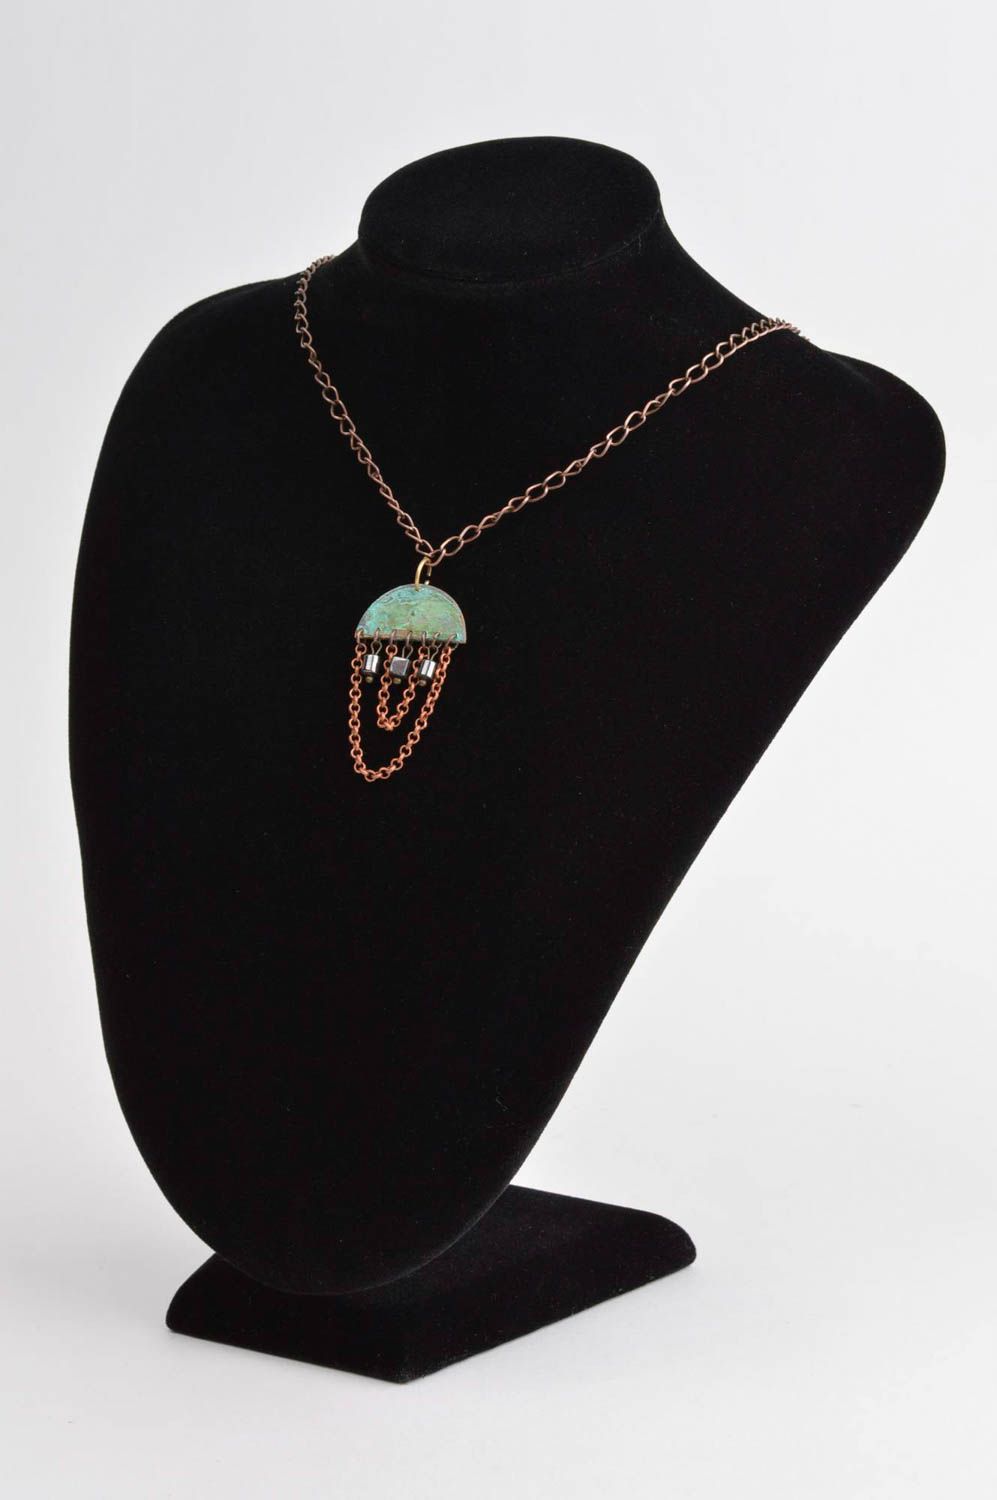 Handmade pendant designer accessory copper jewelry gift ideas pendant with stone photo 1